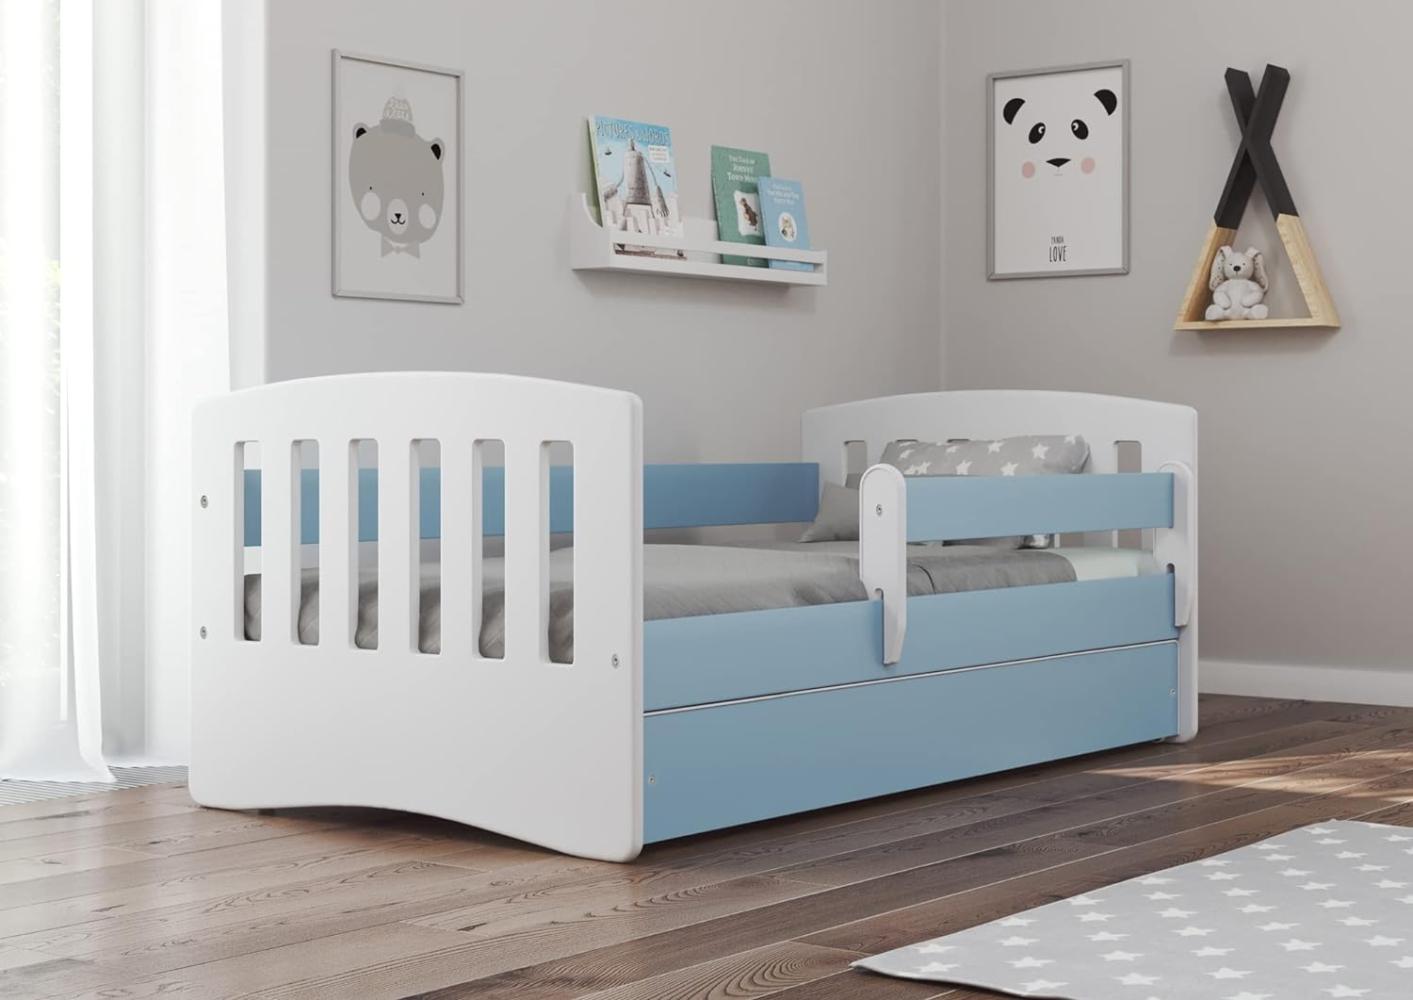 Bjird 'Classic' Kinderbett 80 x 140 cm, Blau, inkl. Rausfallschutz, Lattenrost und Bettschublade Bild 1